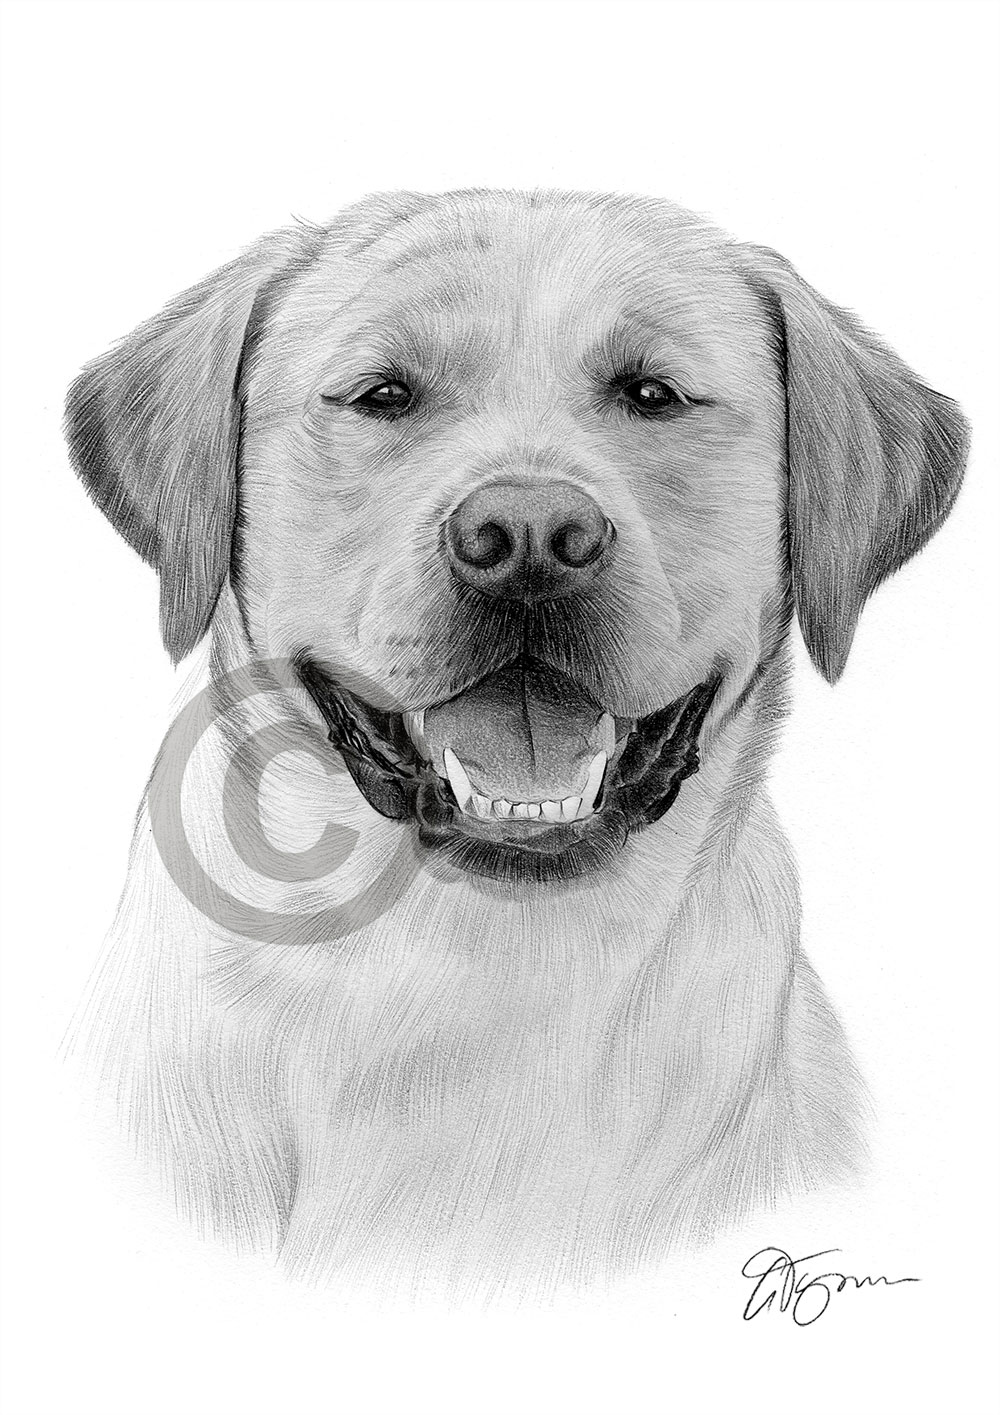 Pencil drawing of an adult labrador retriever by artist Gary Tymon